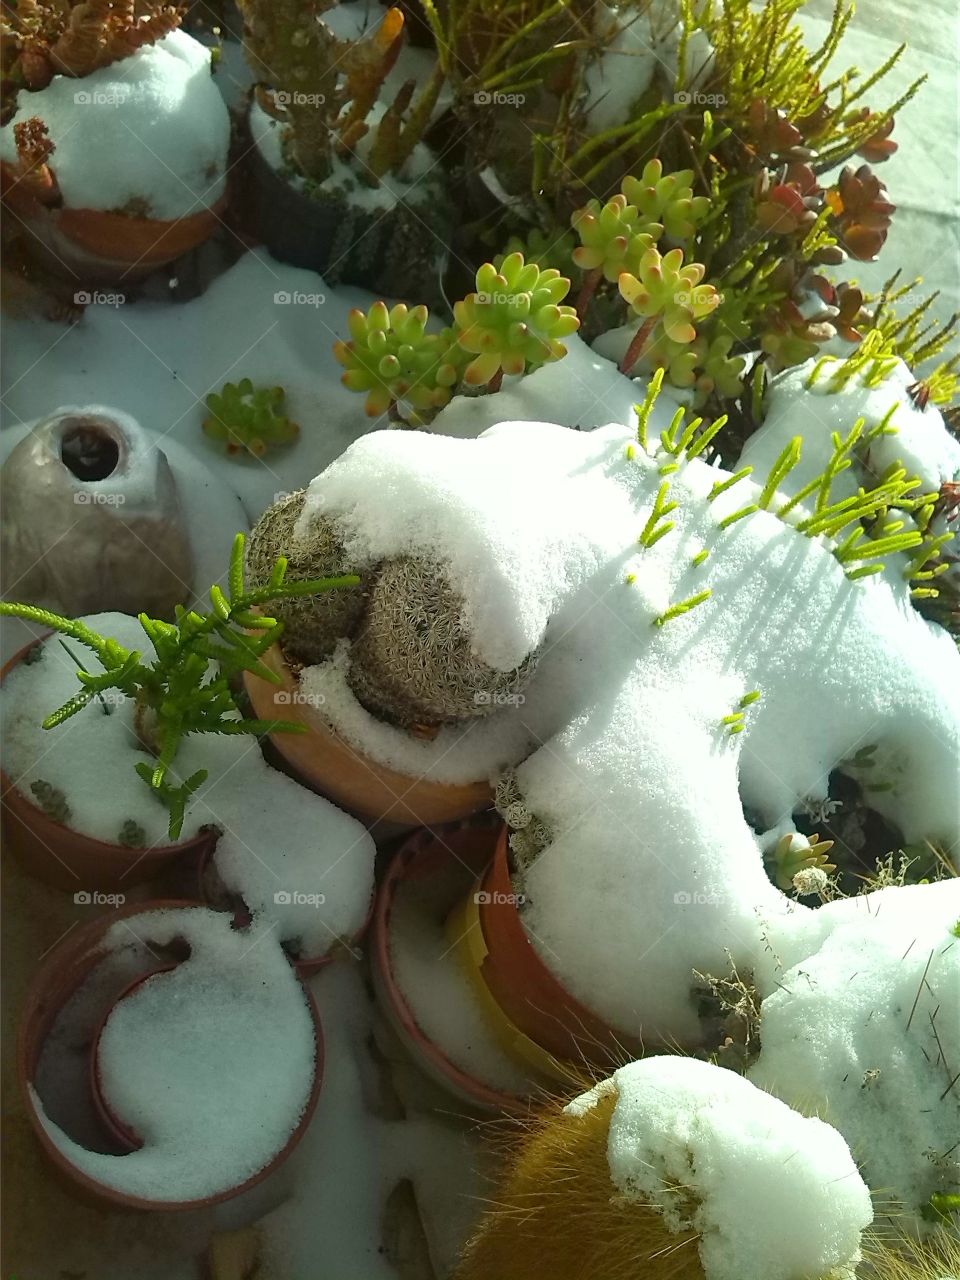 Snow on cactus